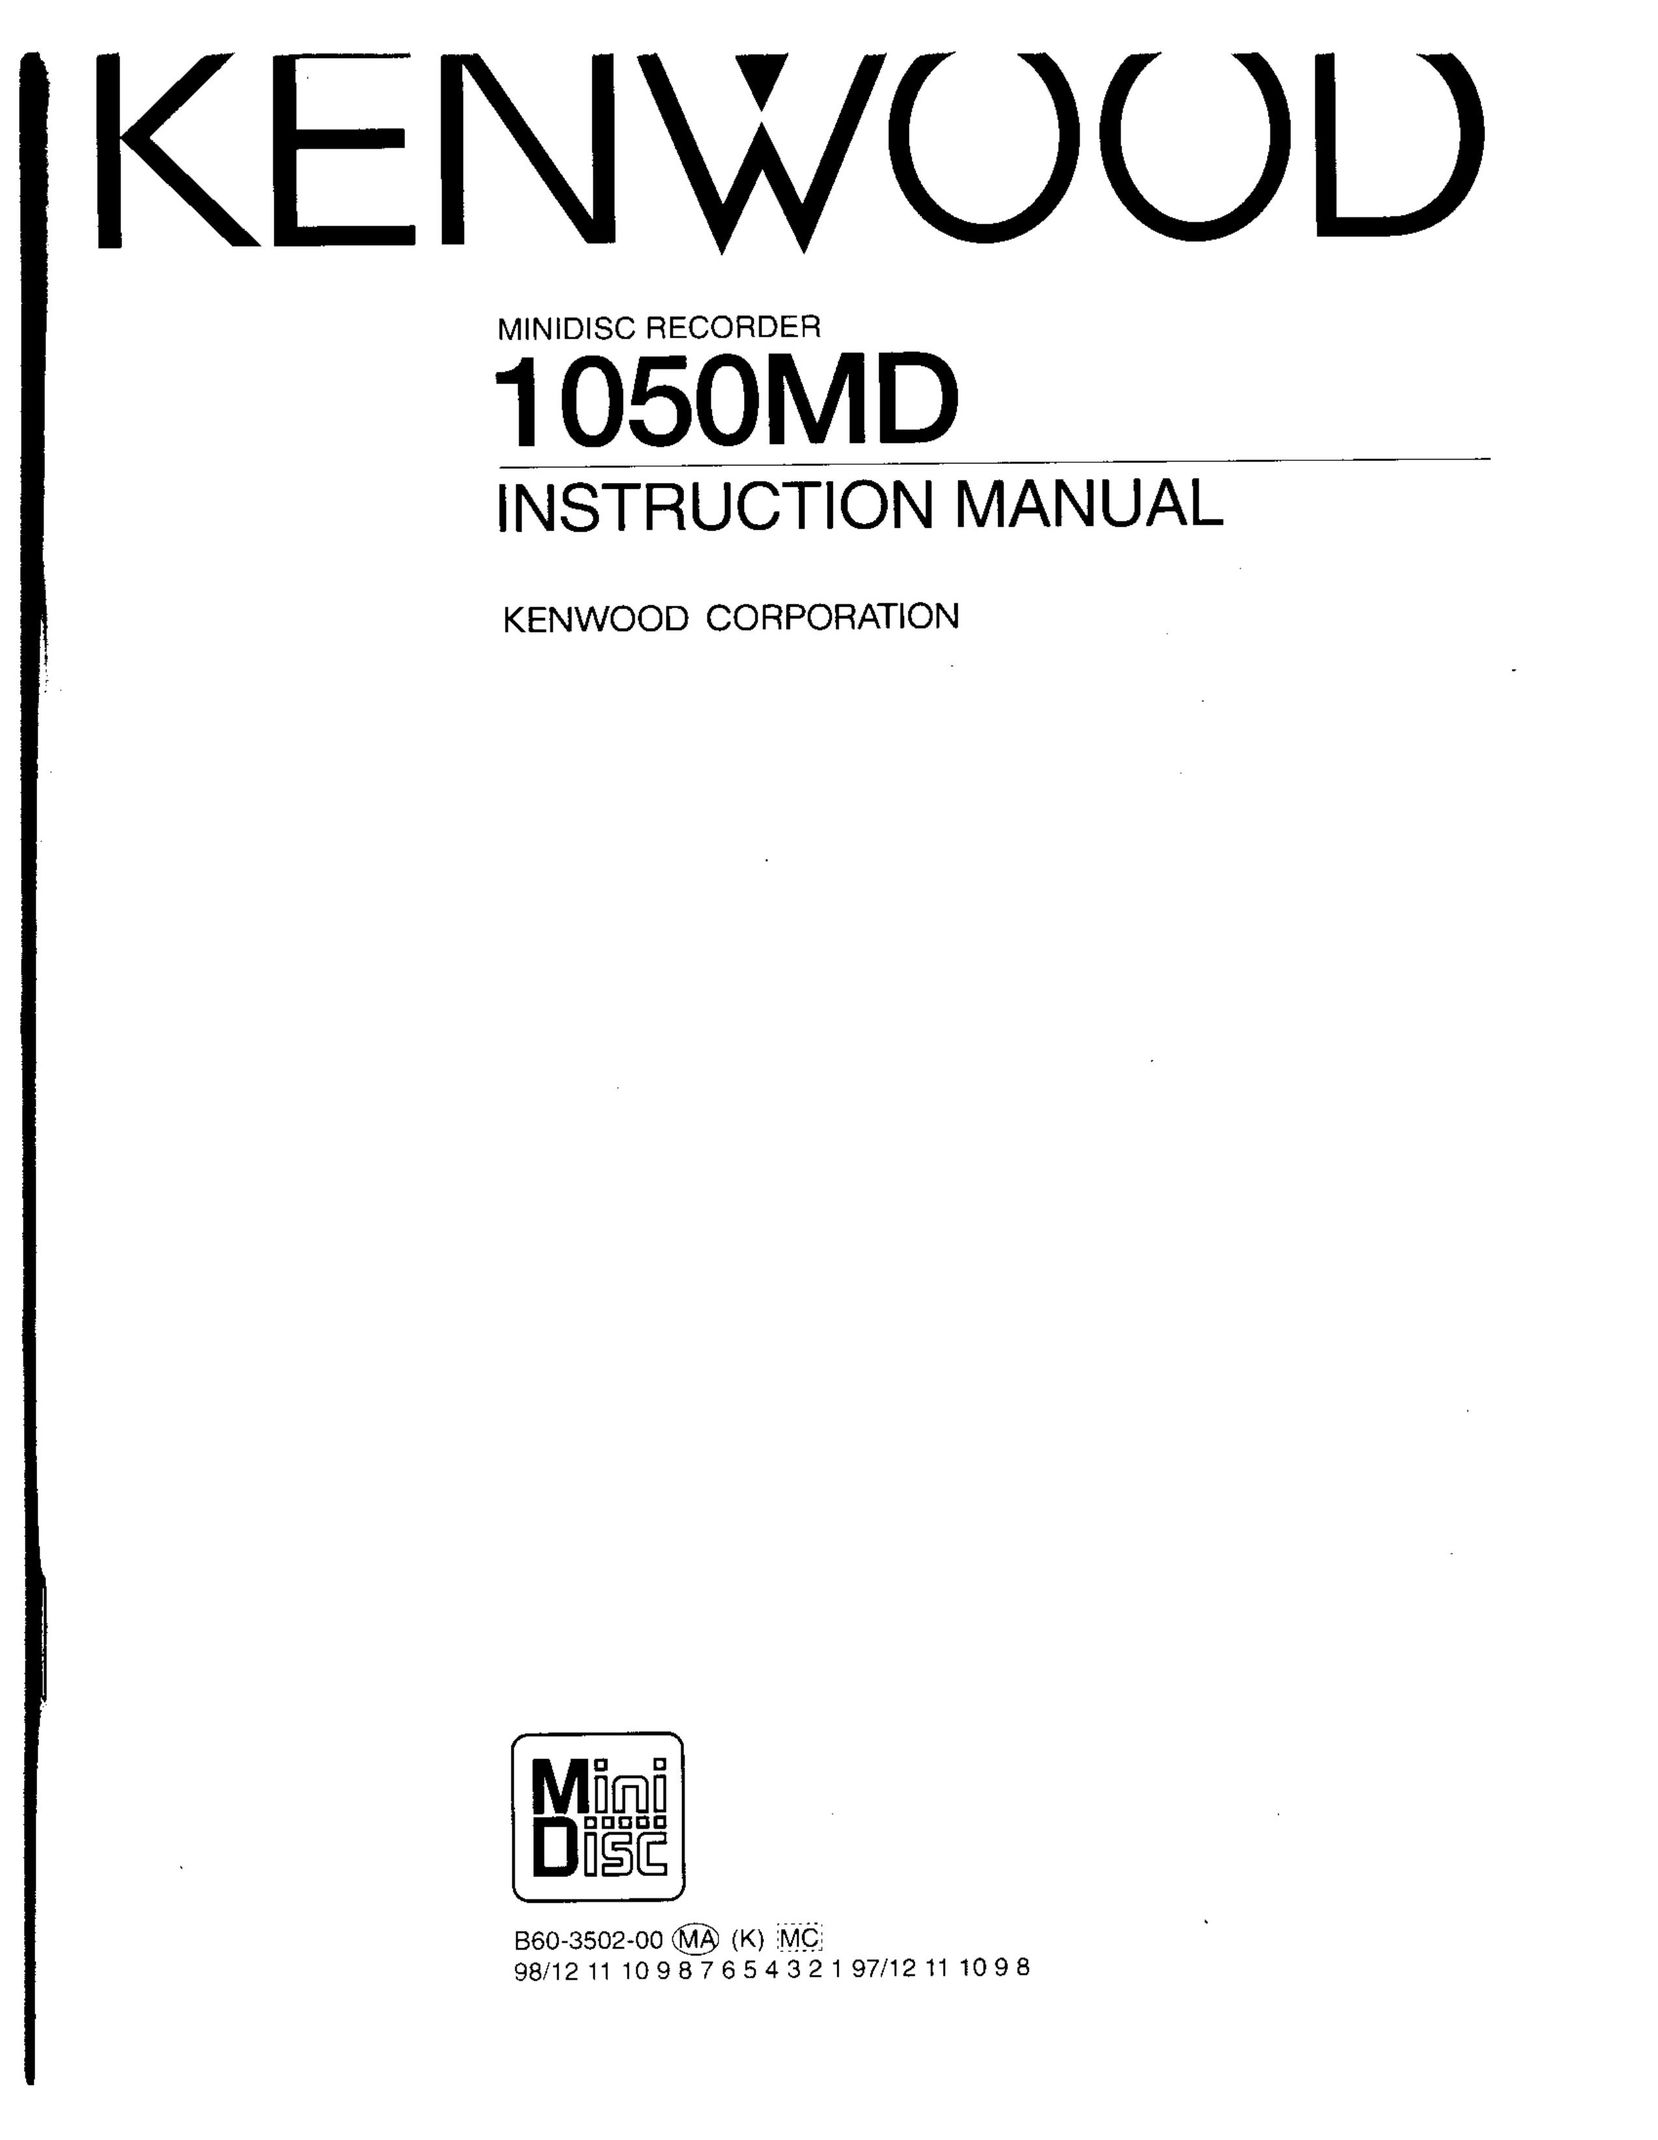 Kenwood BJV140Z MiniDisc Player User Manual